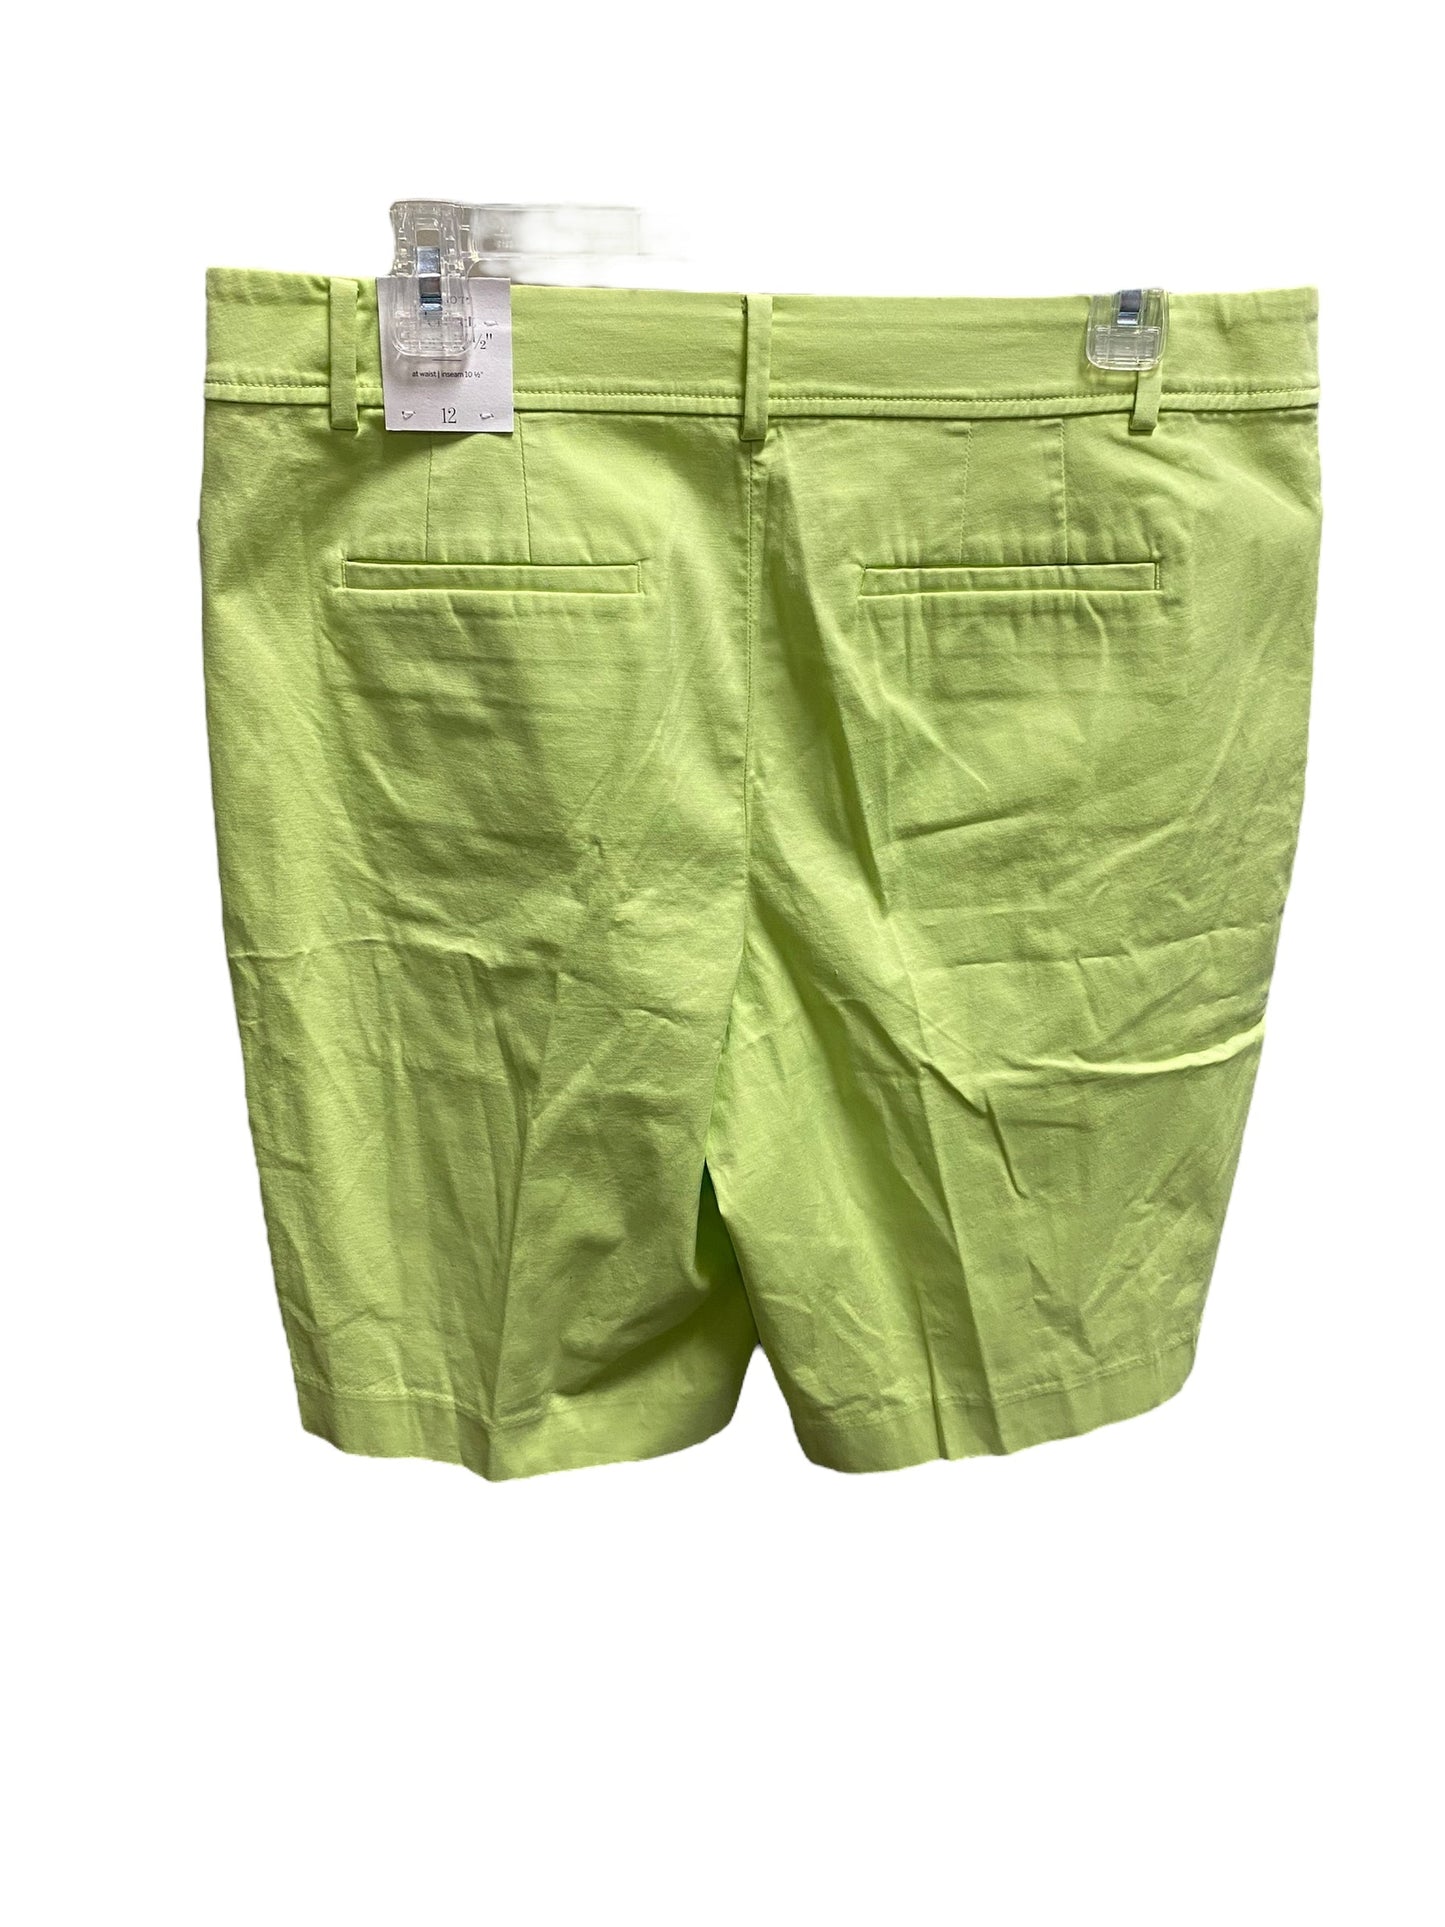 Green Shorts Talbots, Size 12